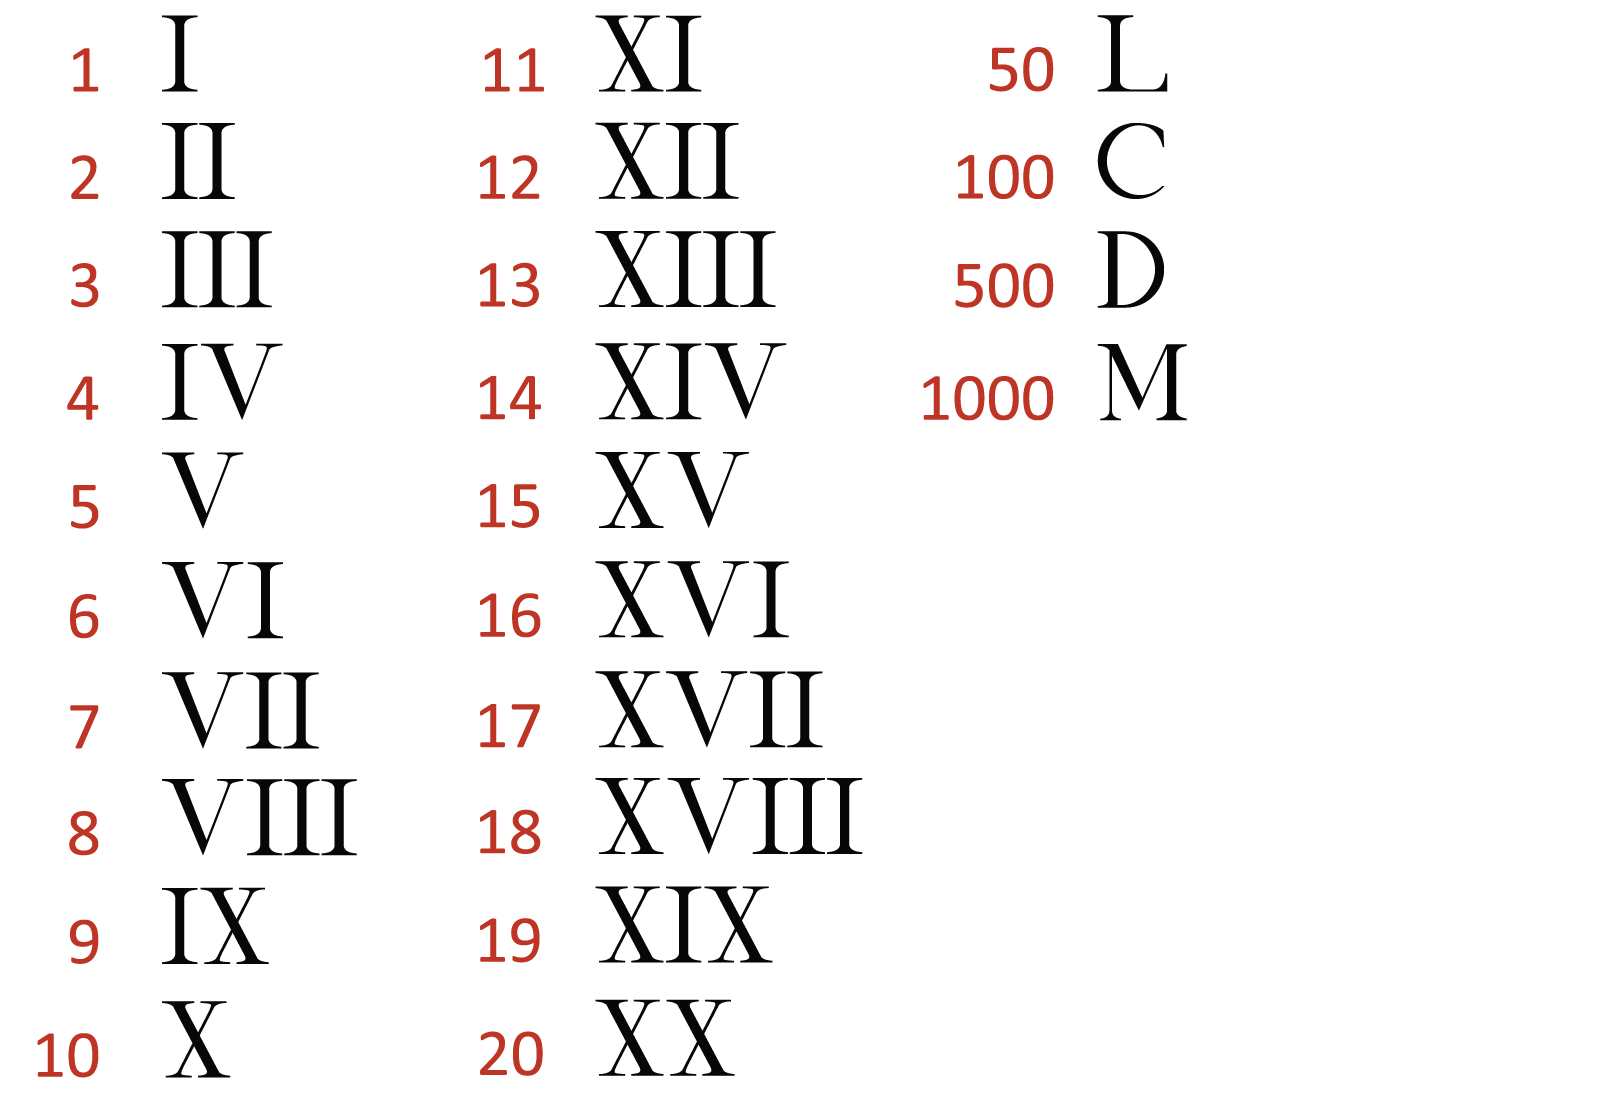 Сколько лет будет 22 век. Века таблица римскими цифрами до 20. Таблица римских цифр от 1 до 1000. Римские цифры от 1 до 10000 таблица. Таблица римских цифр от 1 до 20.